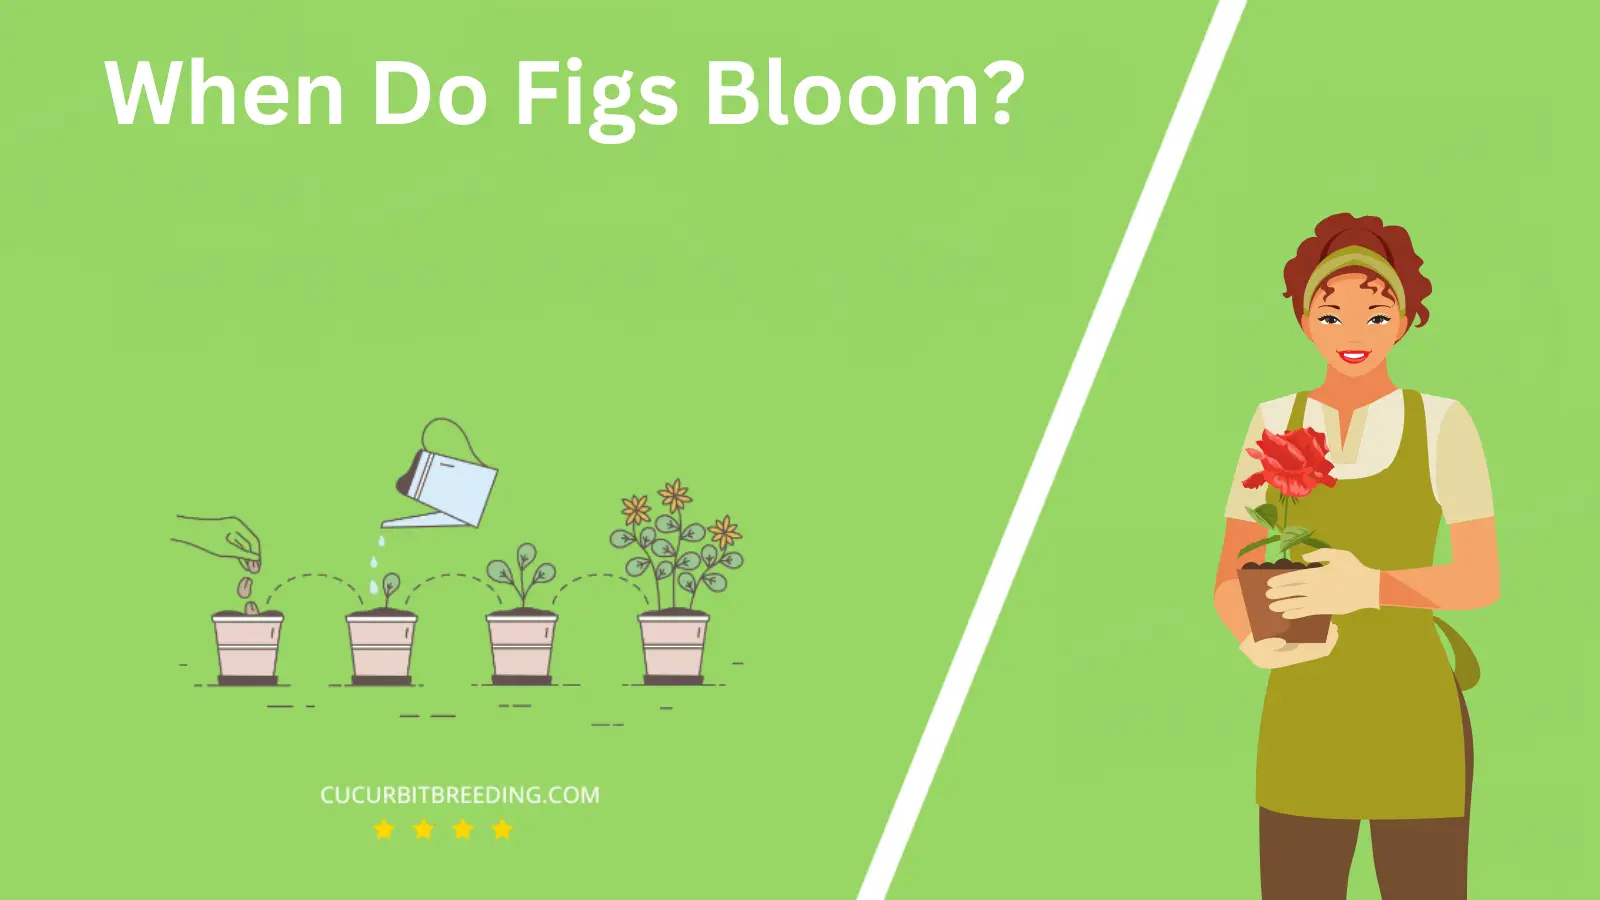 When Do Figs Bloom?